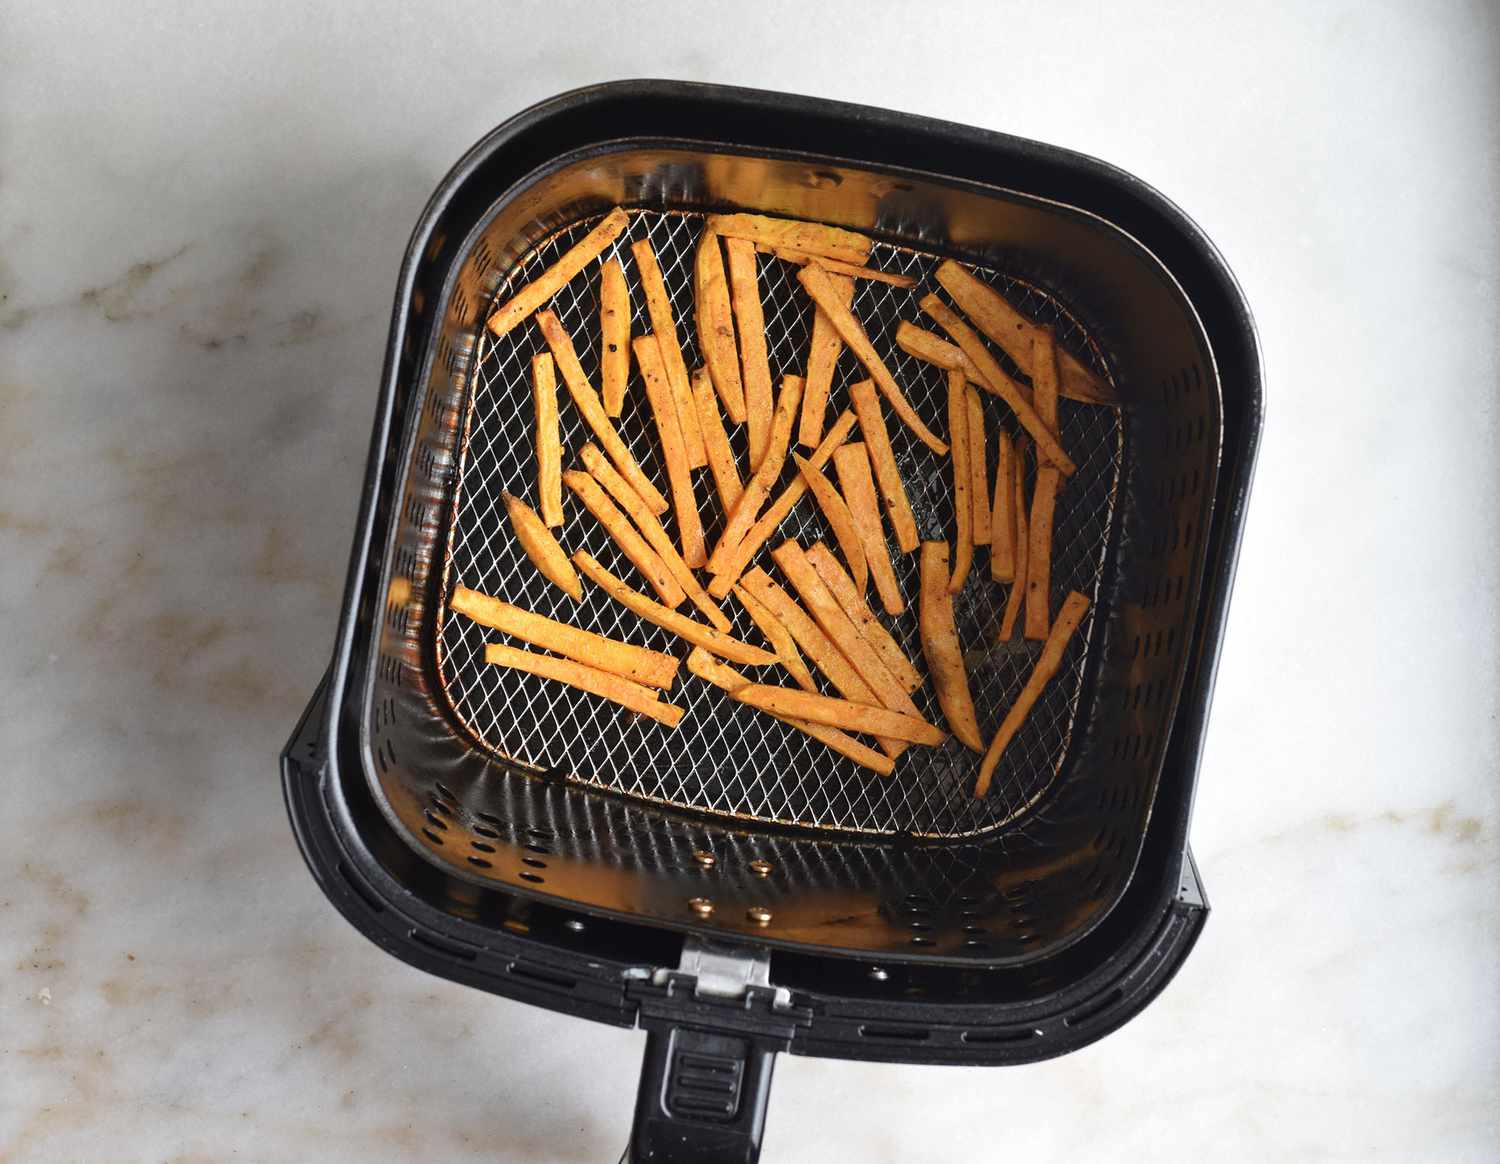 Sweet potato fries in an air fryer basket